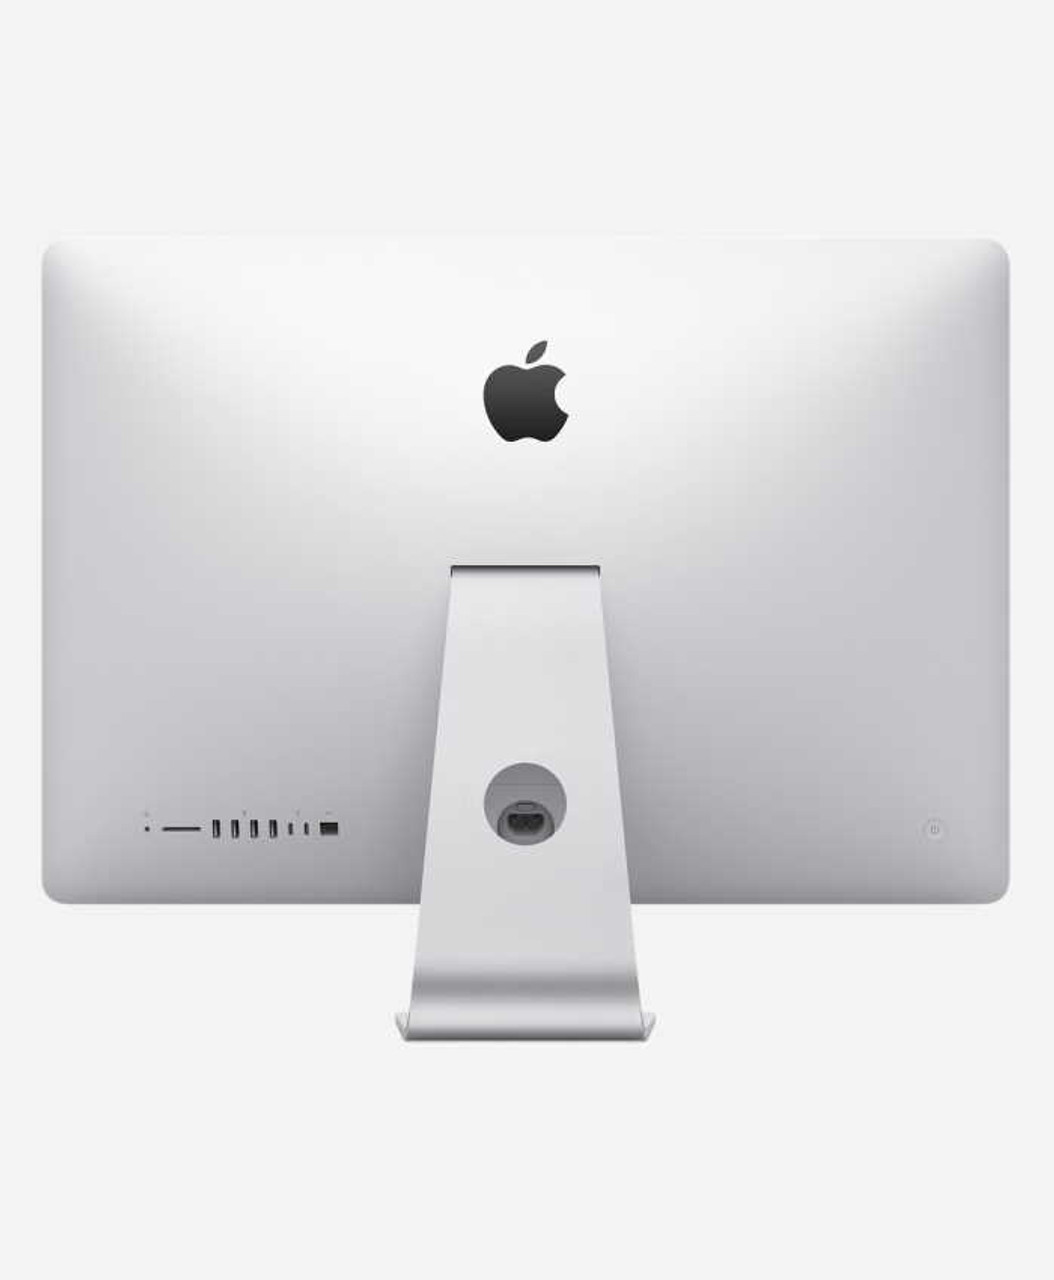 Used Apple iMac 27-inch (Retina 5K) 3.1GHZ 6-Core i5 (2020 